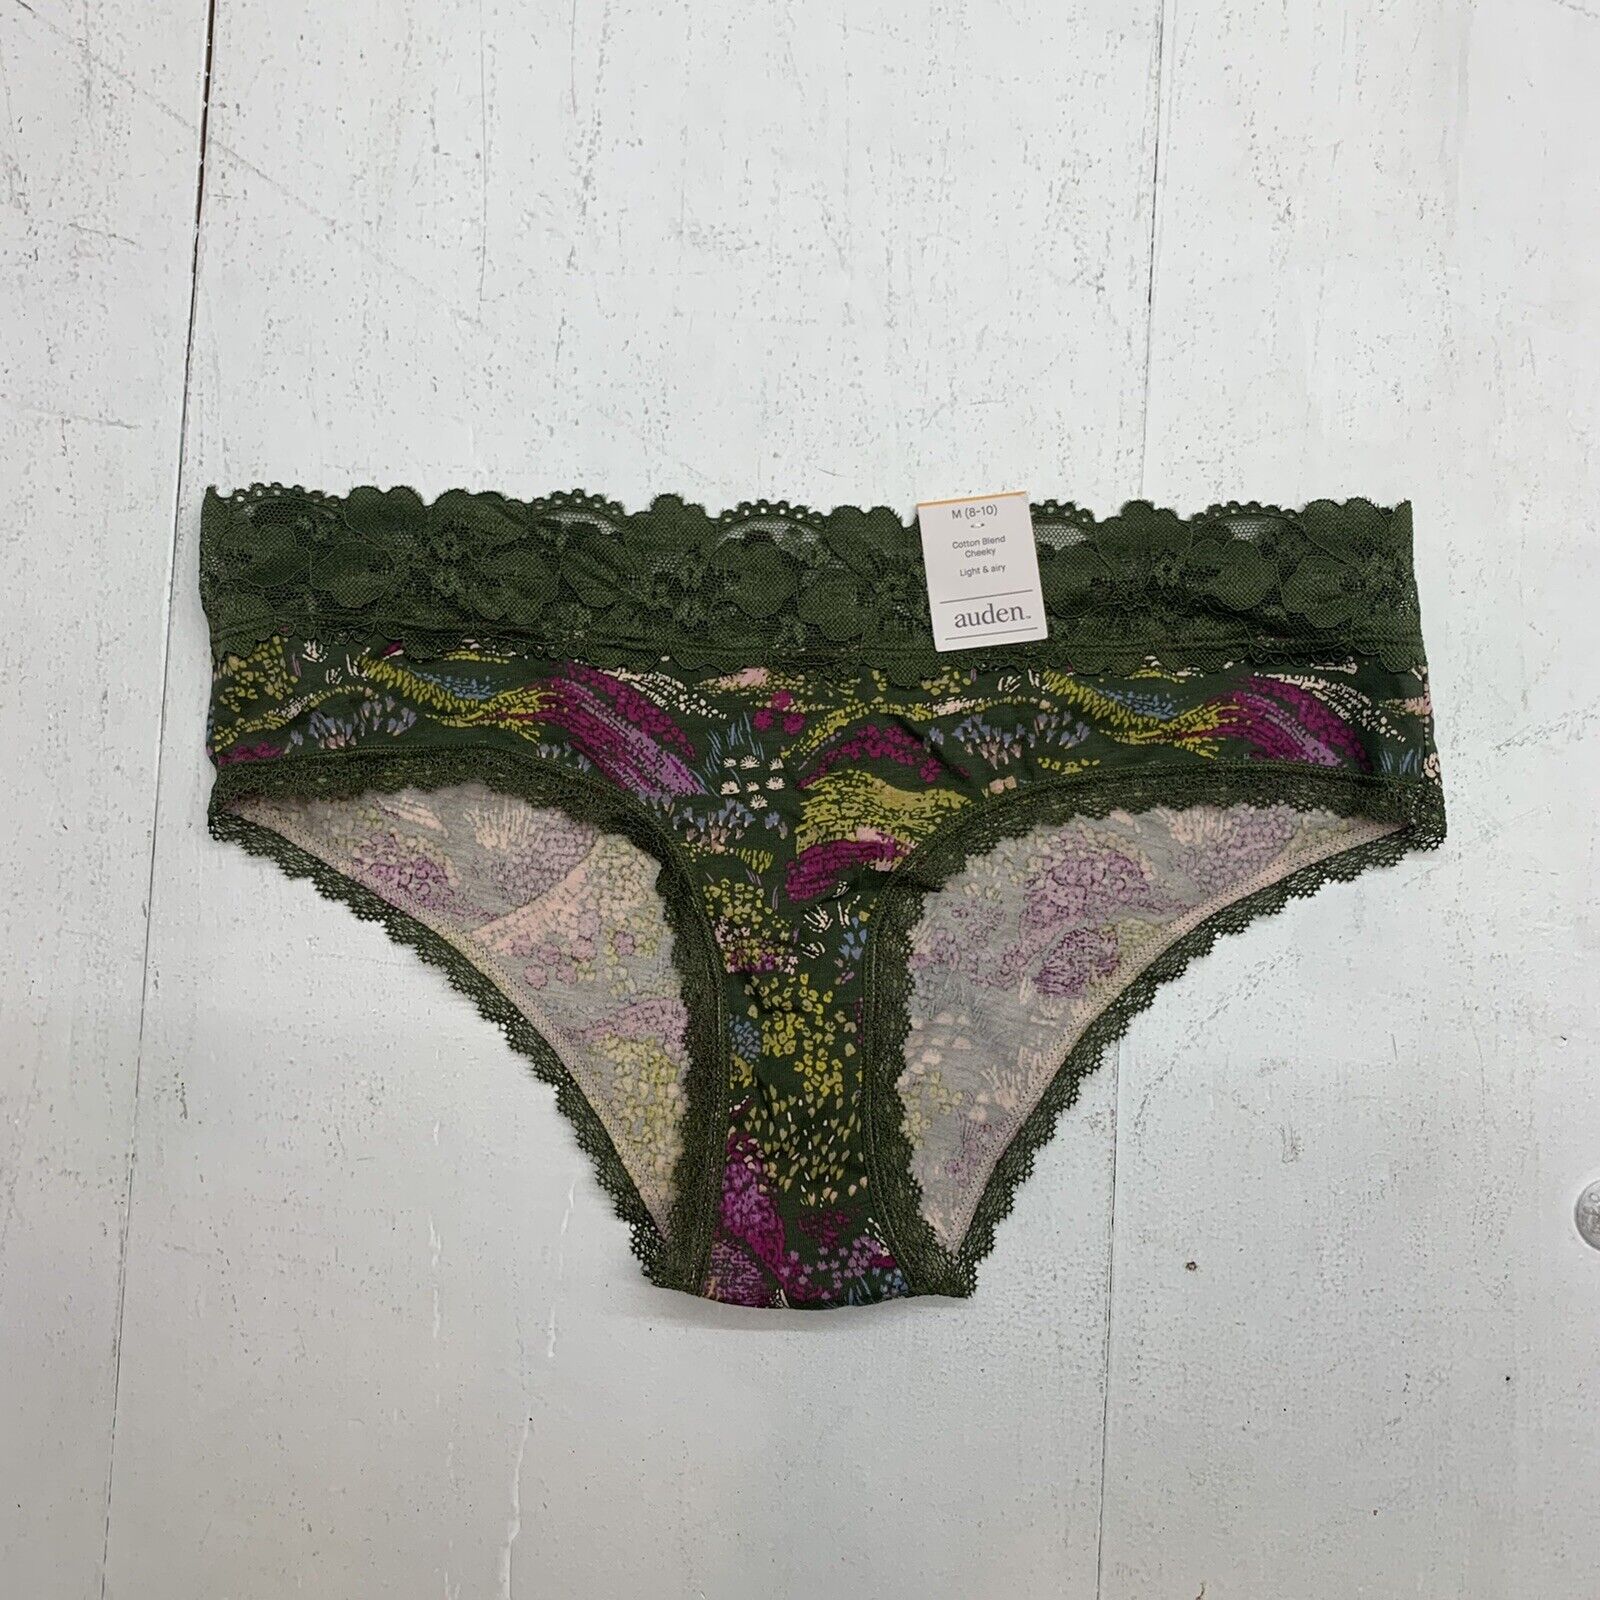 Auden Womens Green Lace Cheeky Panties size Medium - beyond exchange